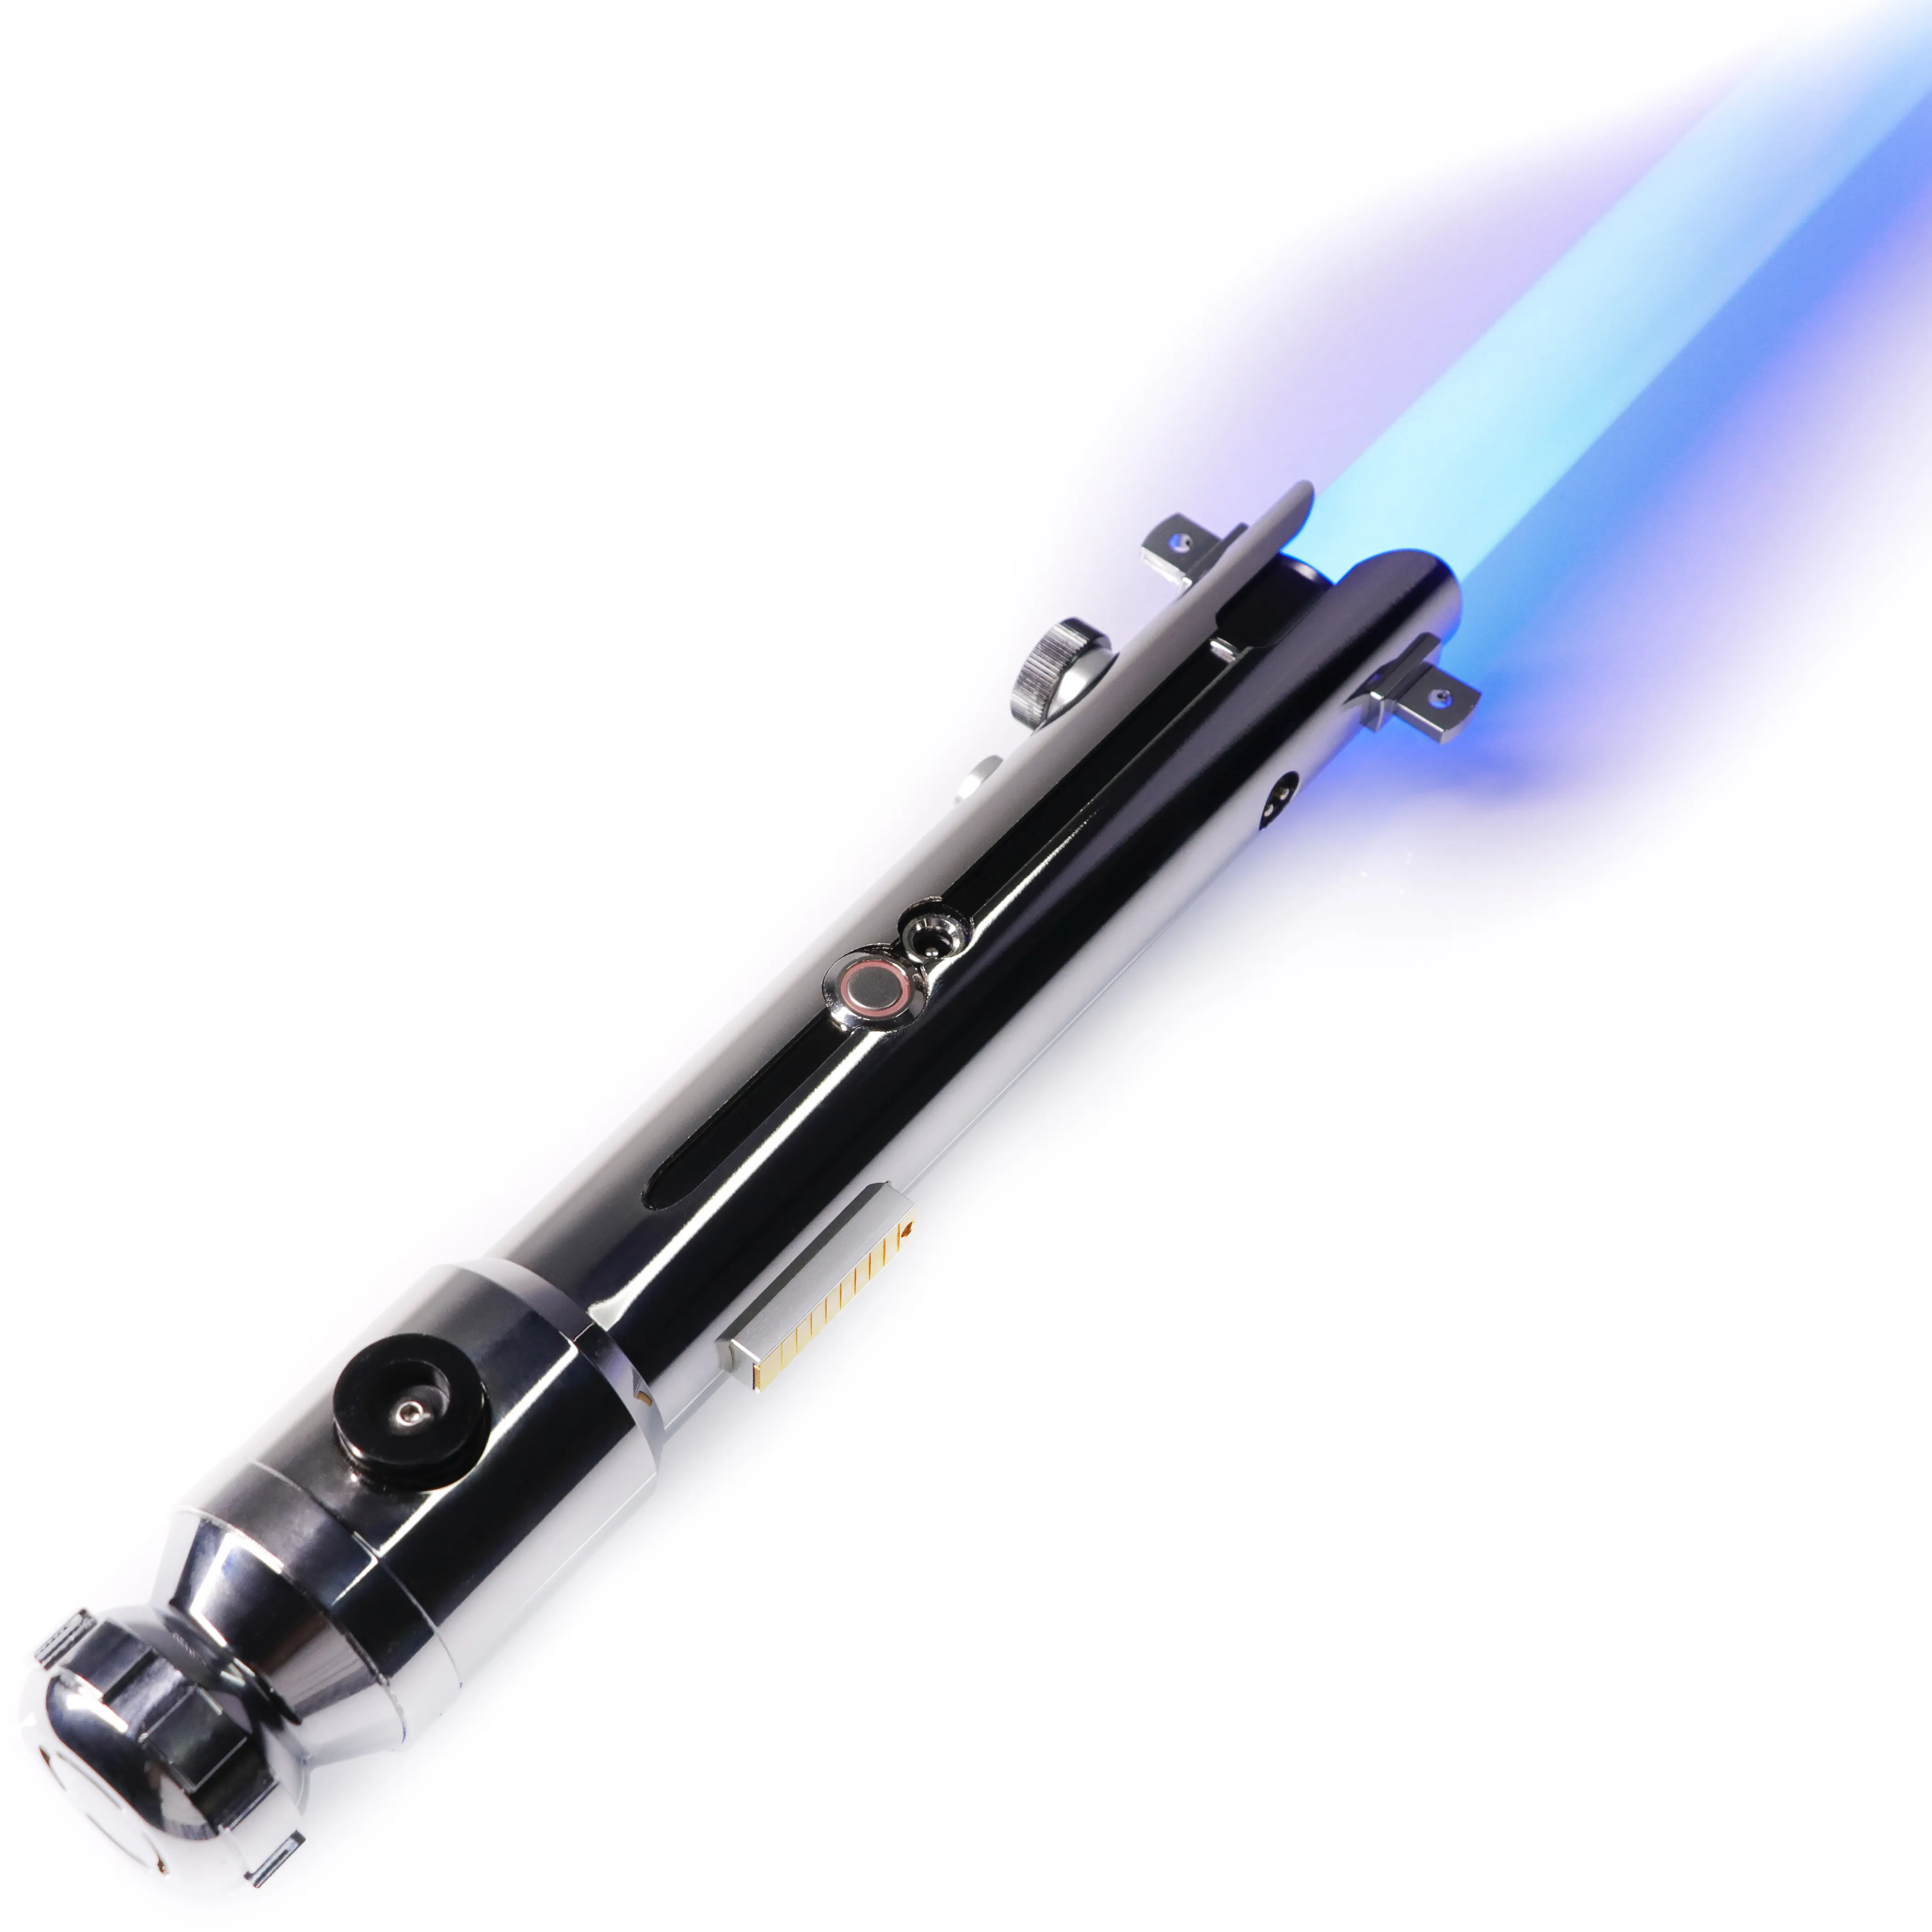 Lgt Saberstudio Ahsoka aber special material infinite color sensitive rechargeable laser sword for cosplay entertainment